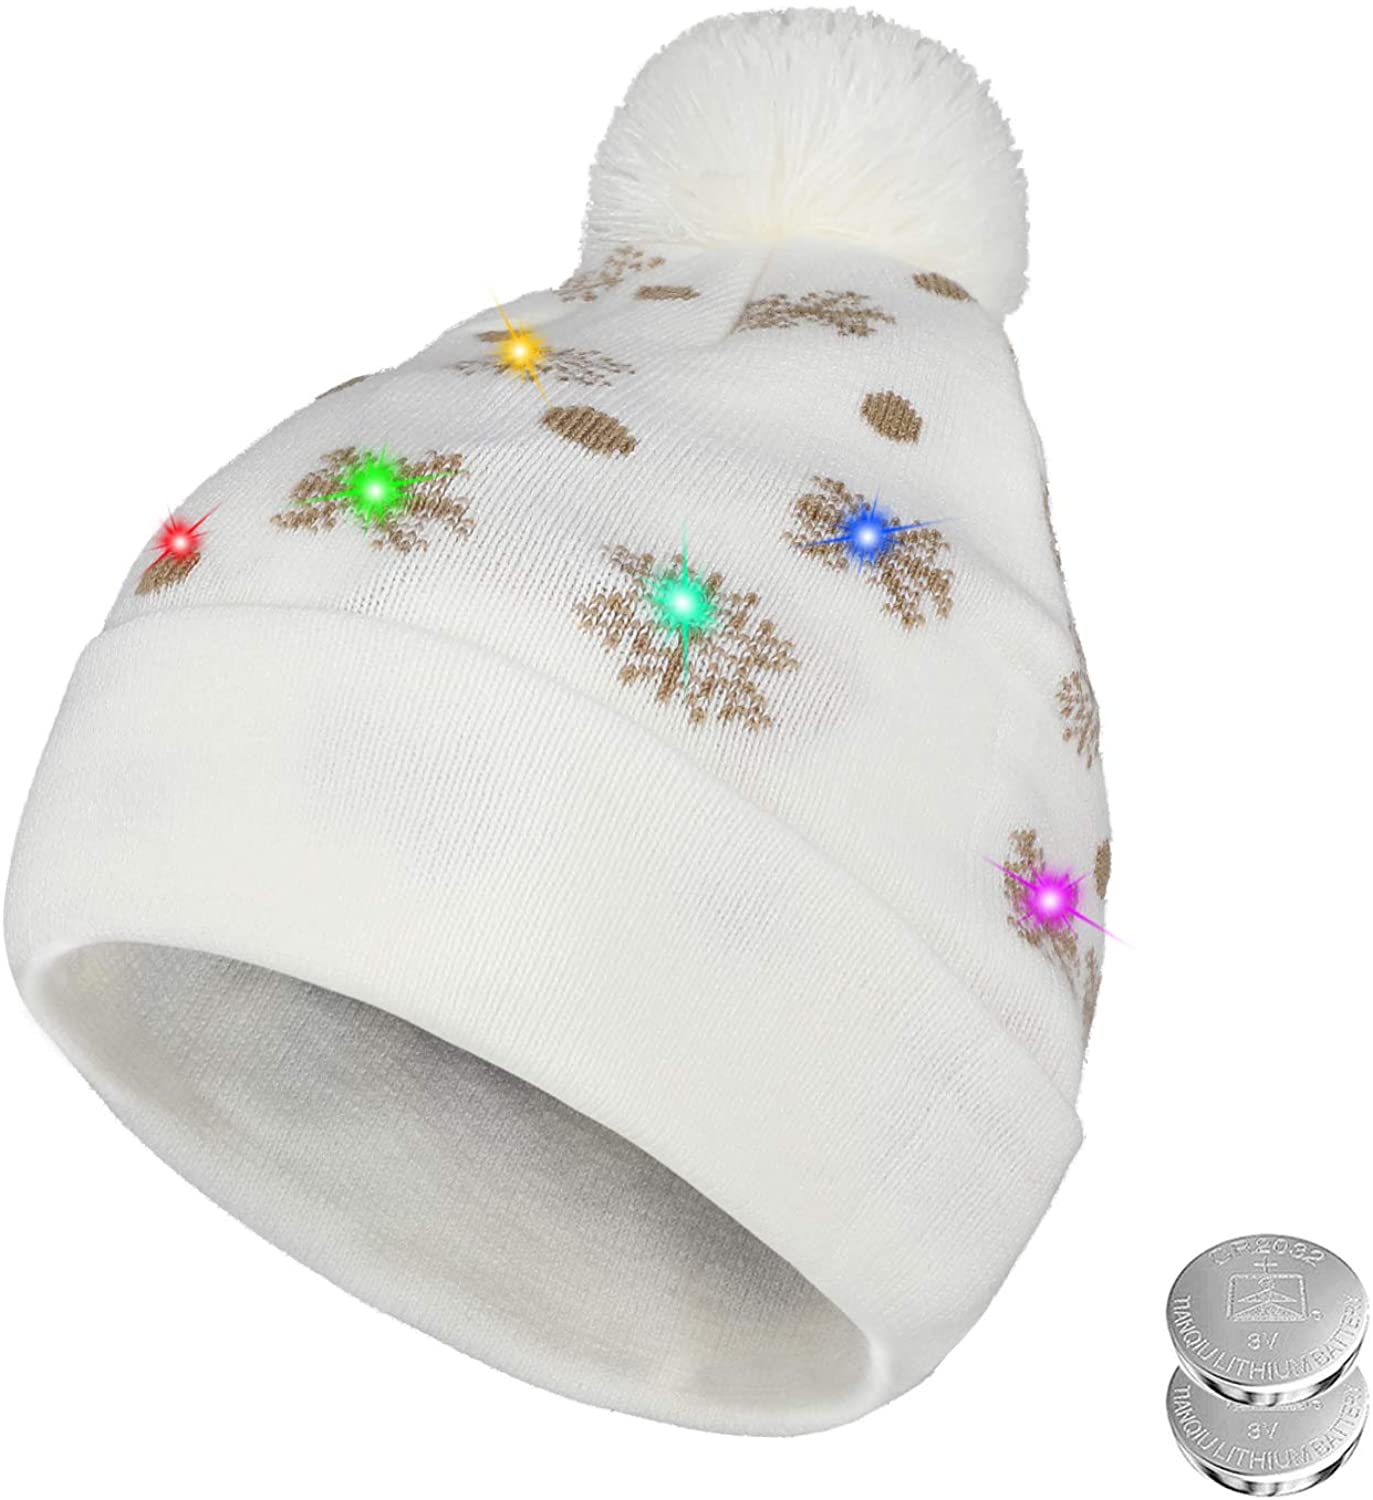 TAGVO LED Light Up Hat Beanie Knit Cap Colorful LED Xmas Christmas Beanie